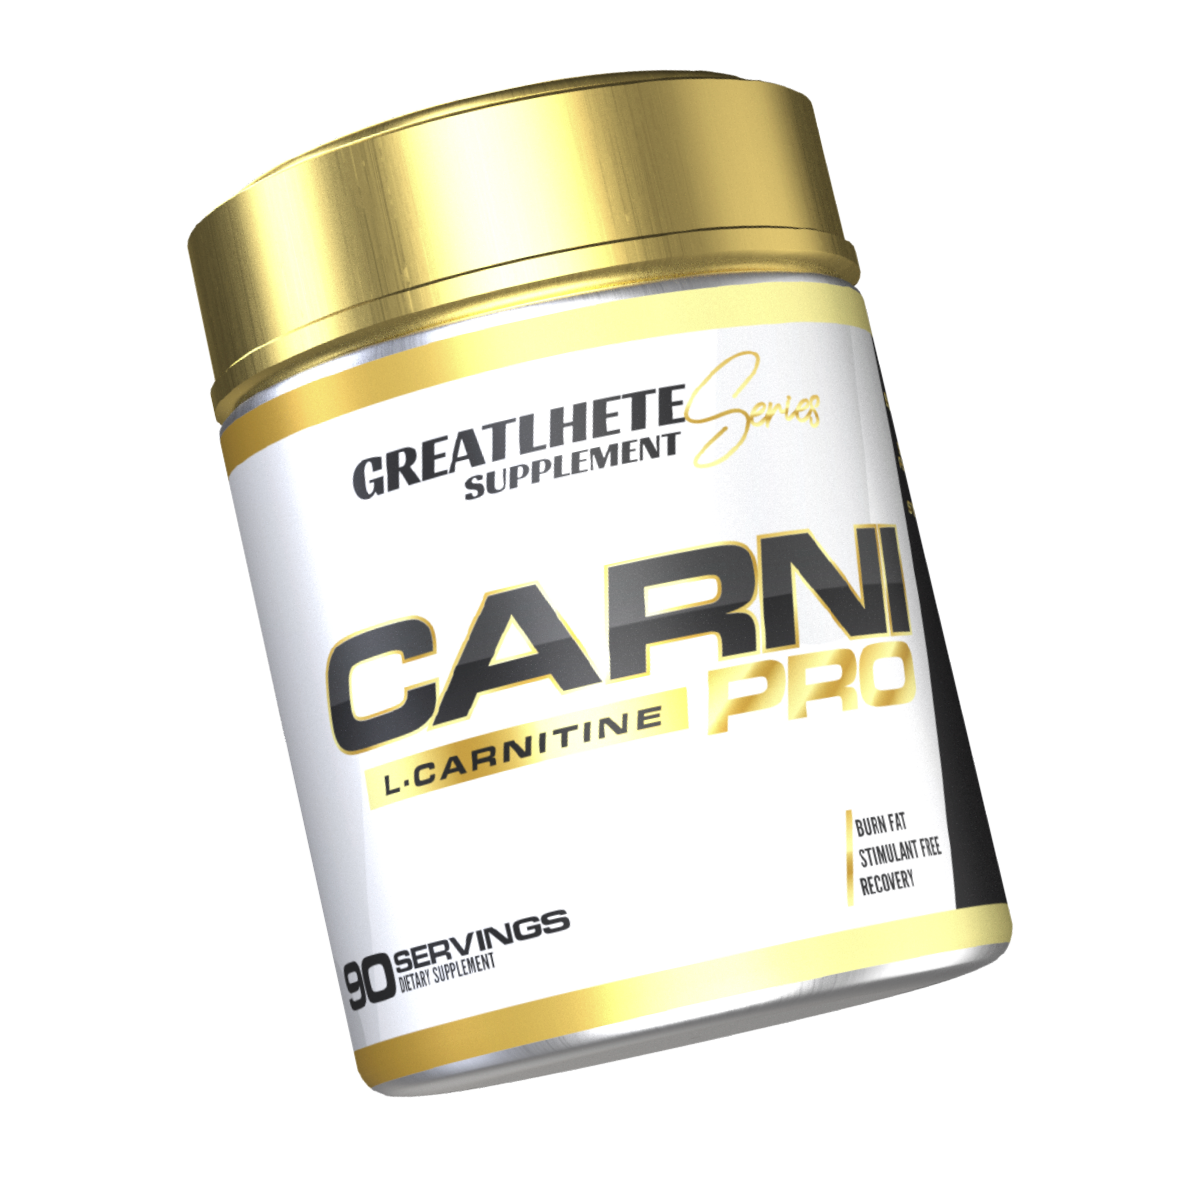 L Carnitina Carni Pro Series – 90 servicios - Greathlete